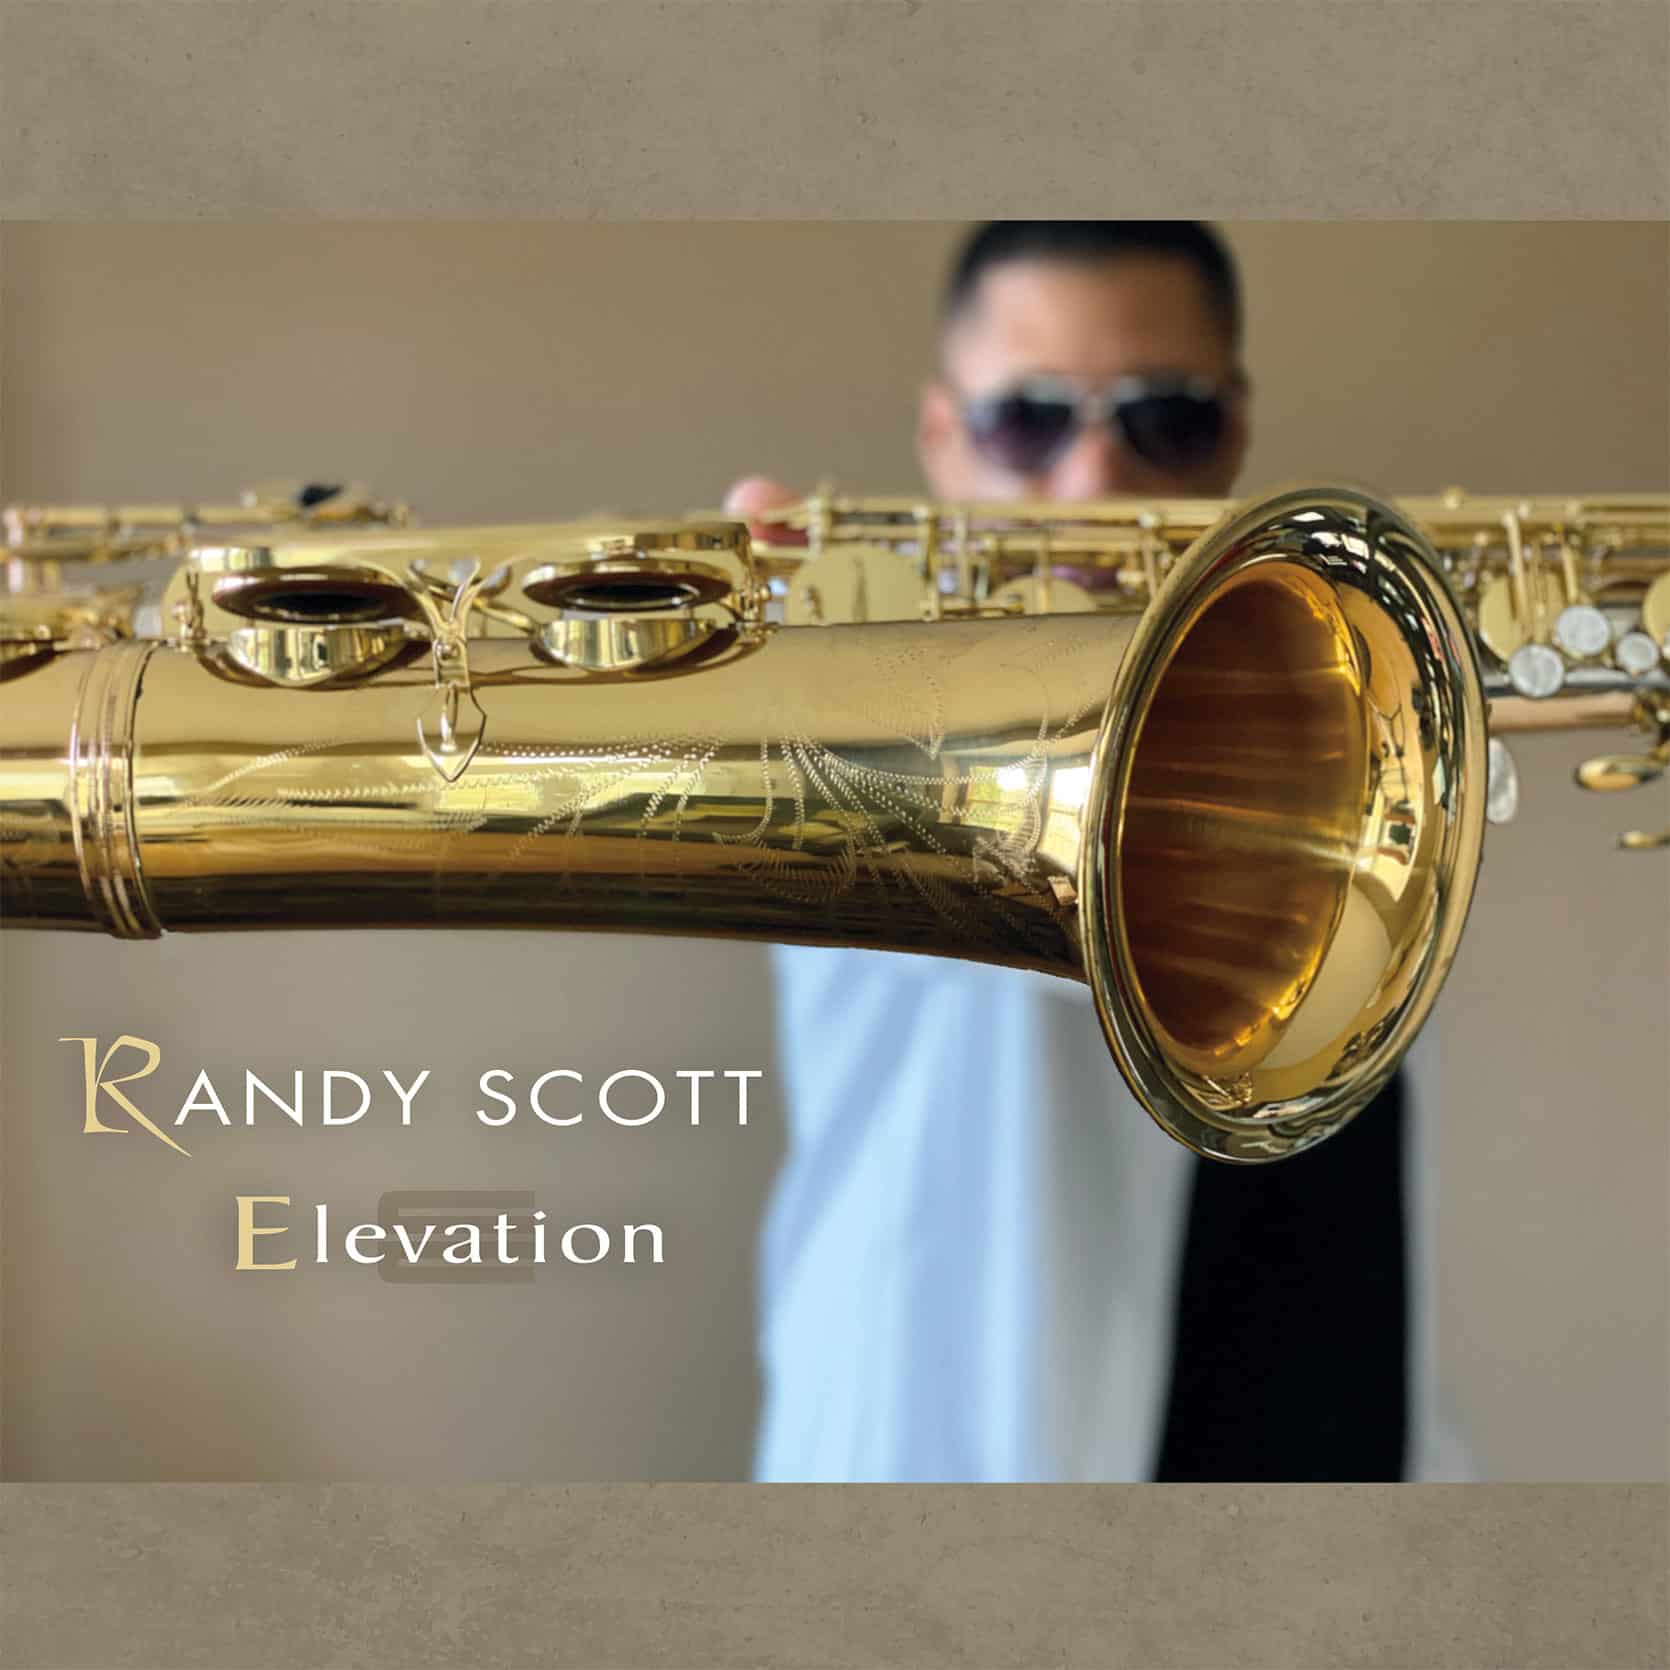 Listen to Elevation by Smooth Jazz recording artist Randy Scott